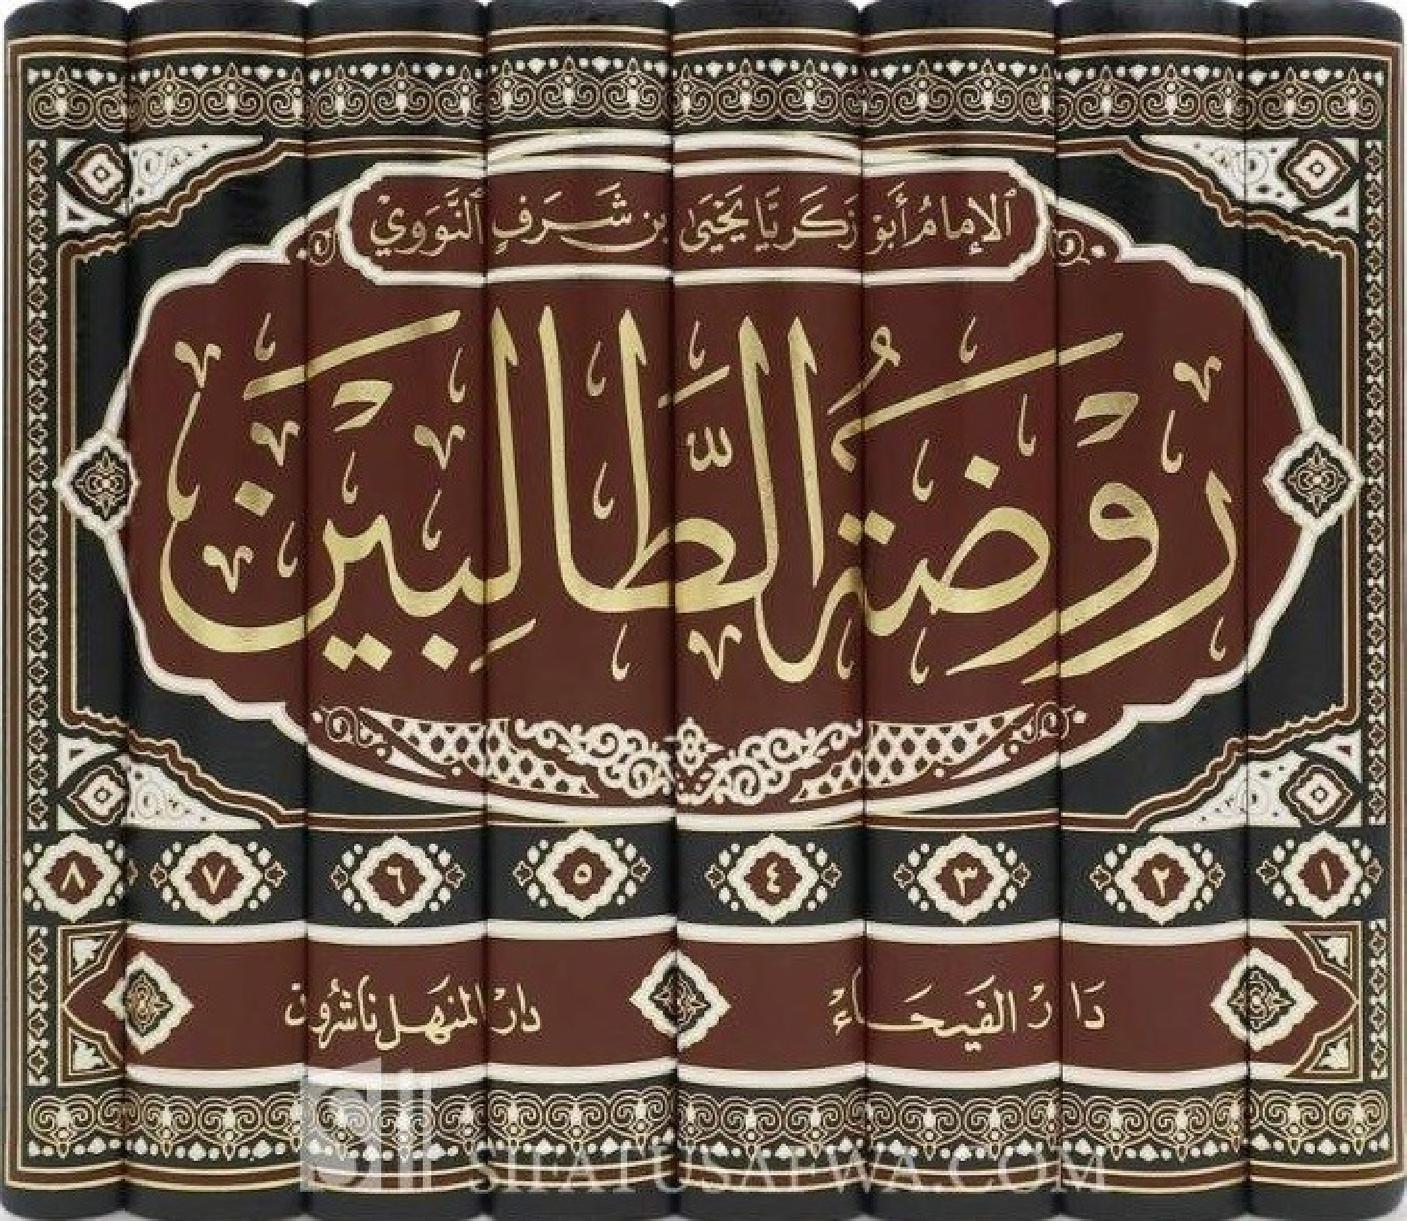 Unduh Kitab Roudhotu Ath-Tholibin PDF. Kitab fiqh karangan Imam Abu Zakariya Yahya ibn Syaraf An-Nawawi. File size 55.7 mb.